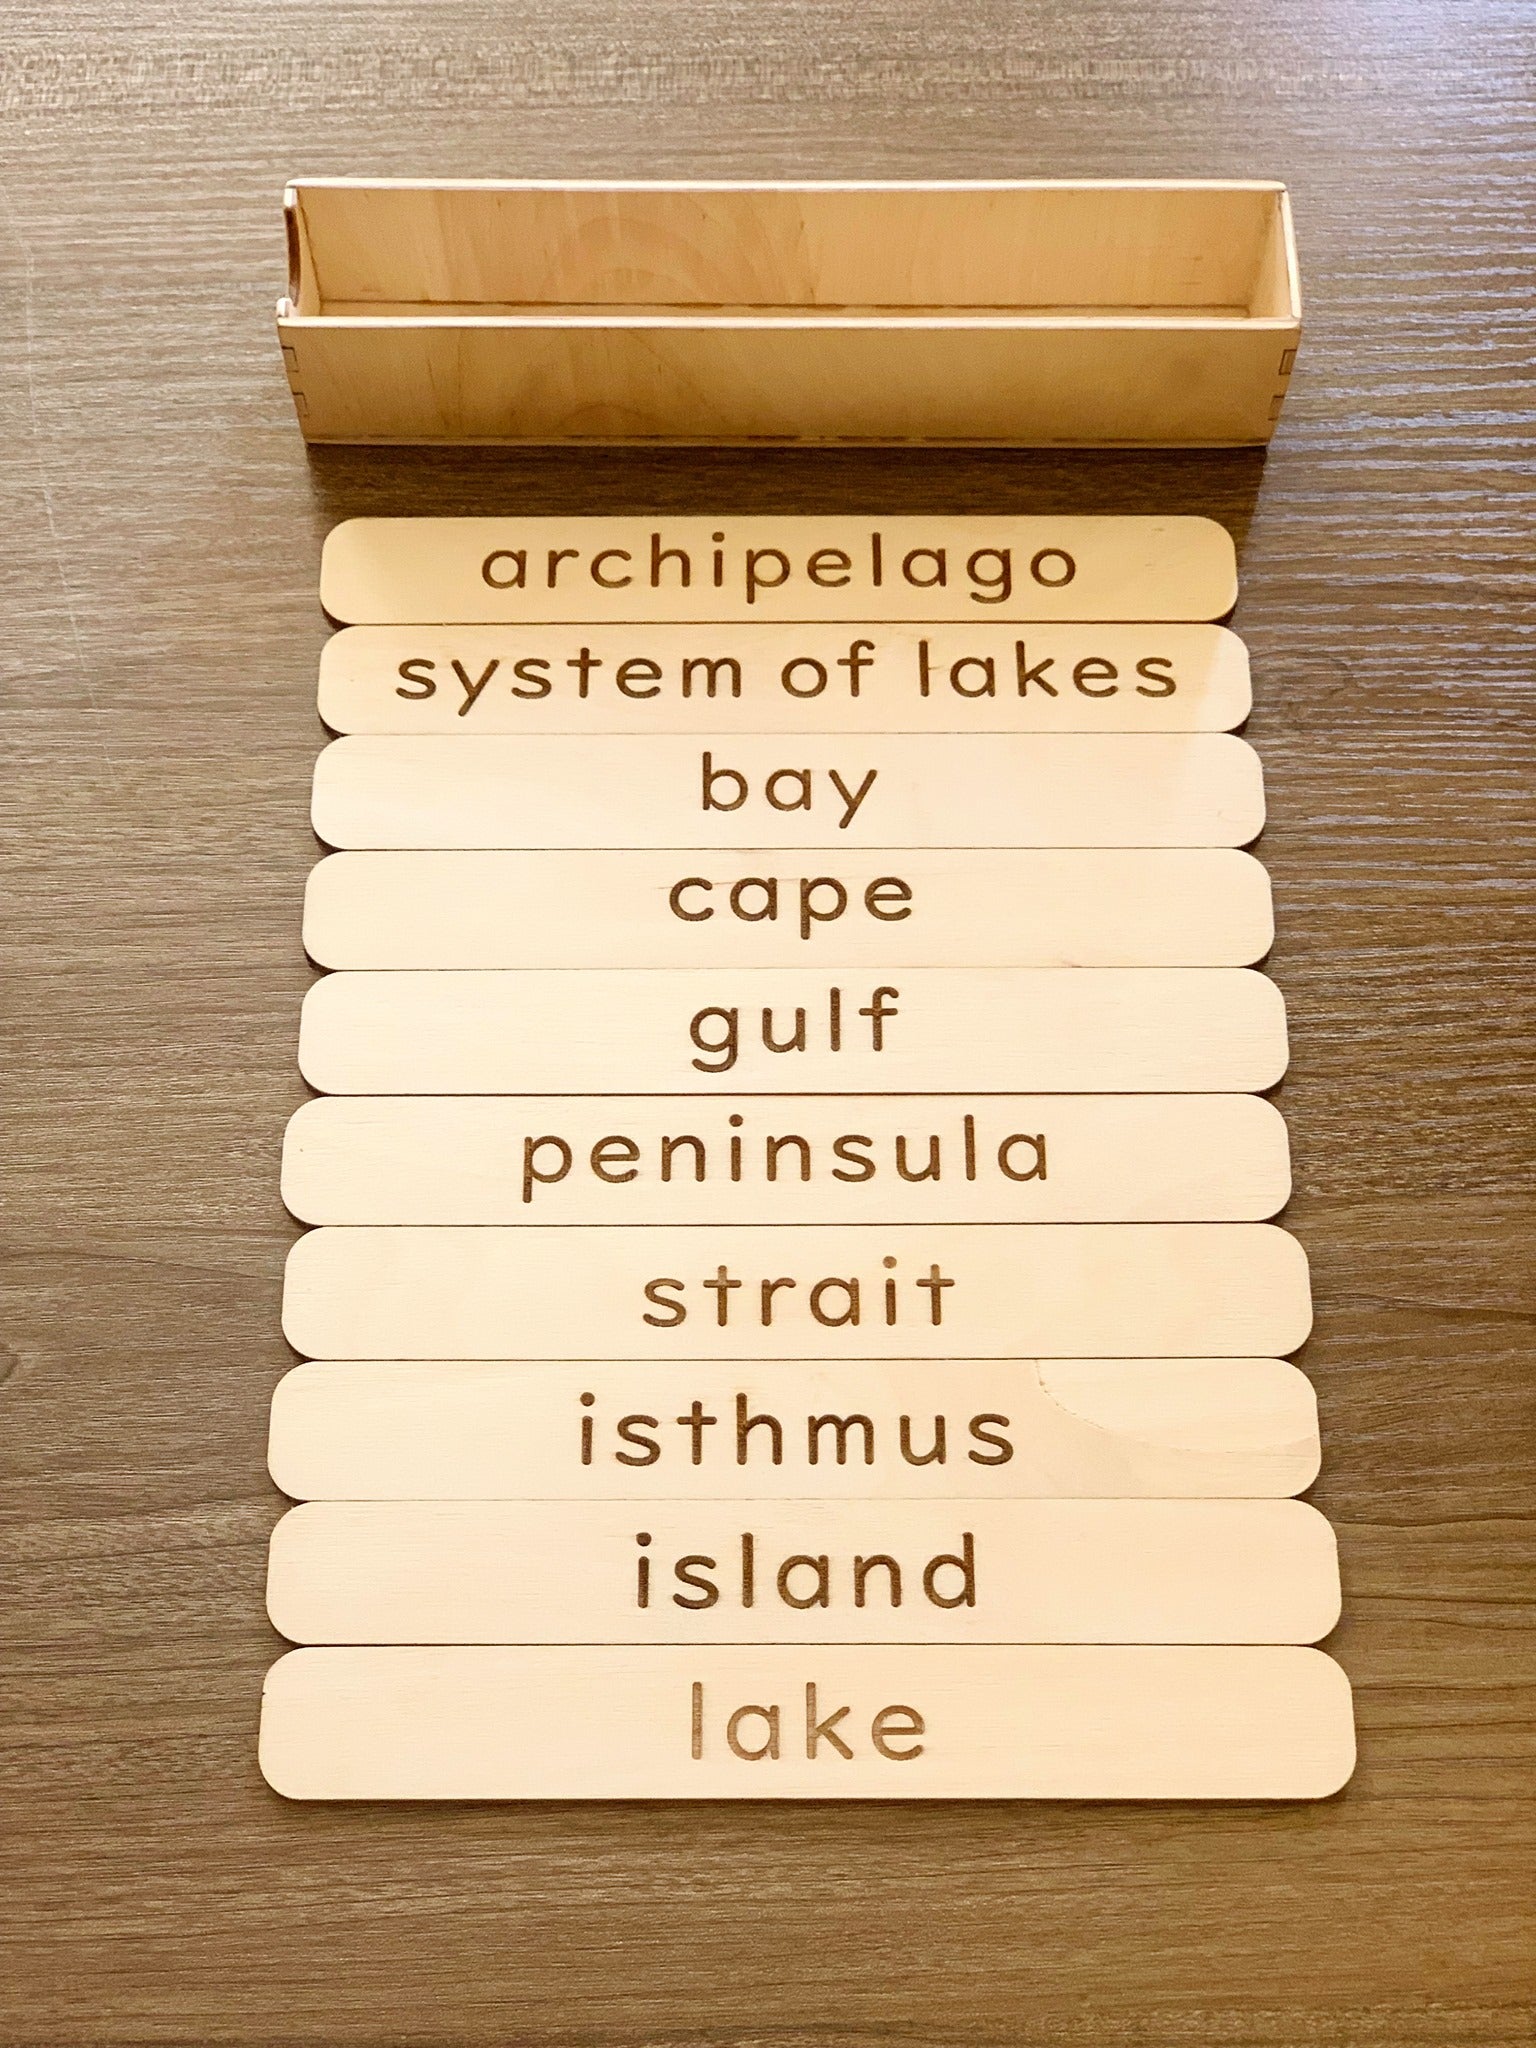 Land and Water Forms Wooden Cards - كروت التضاريس: الأرض والماء